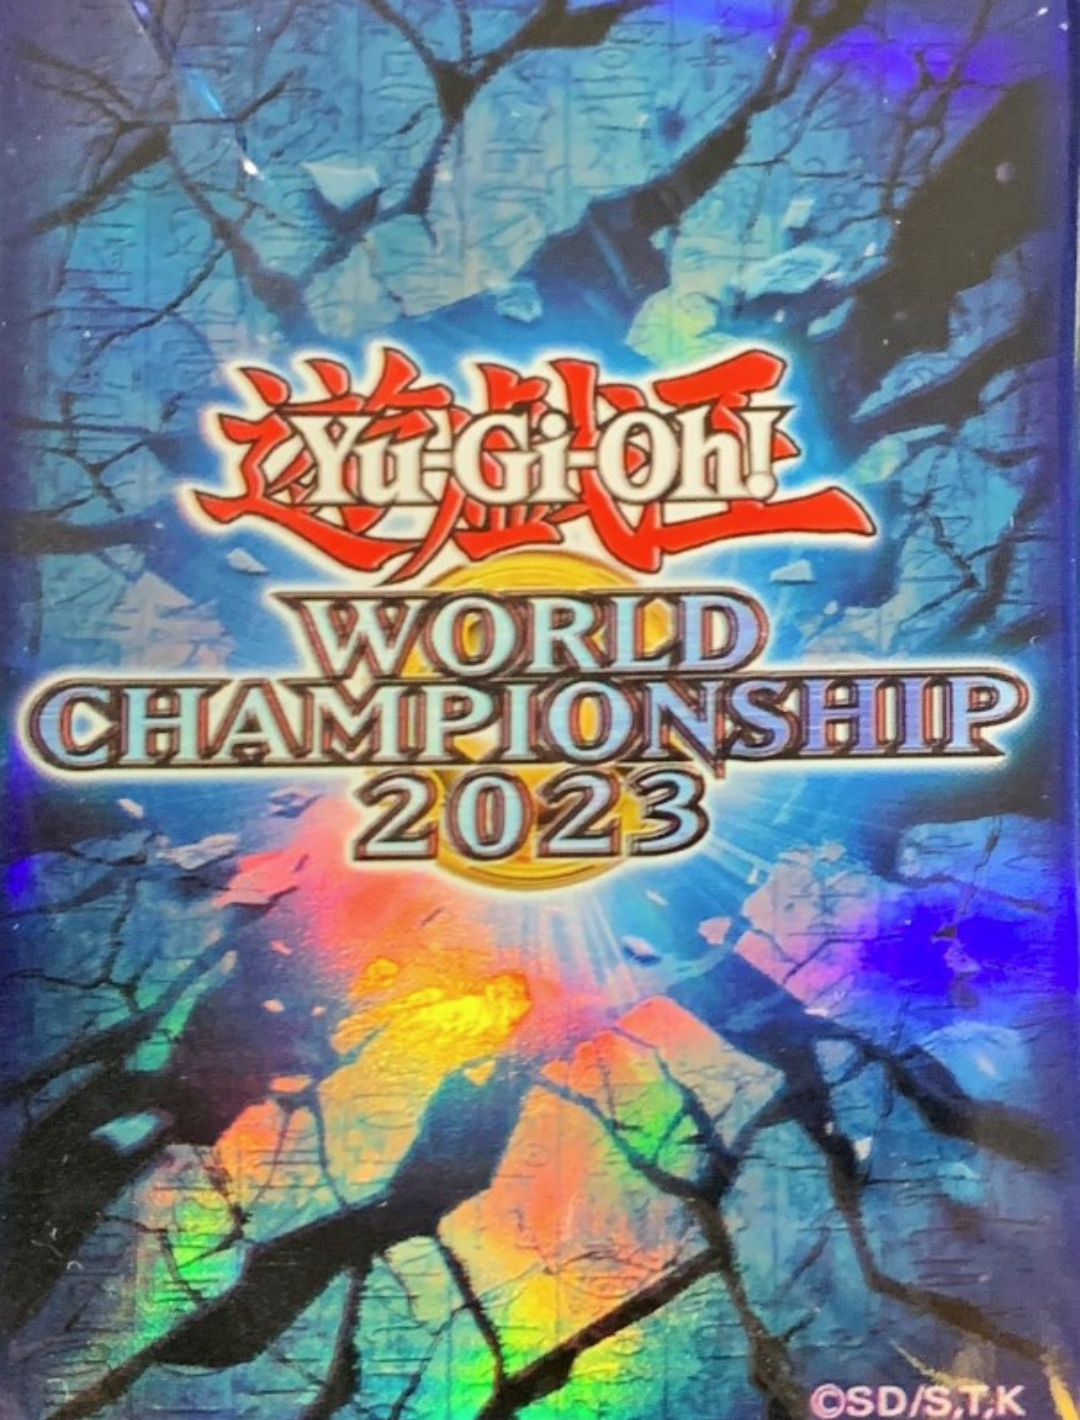 World Championship 2023 - Sleevechief